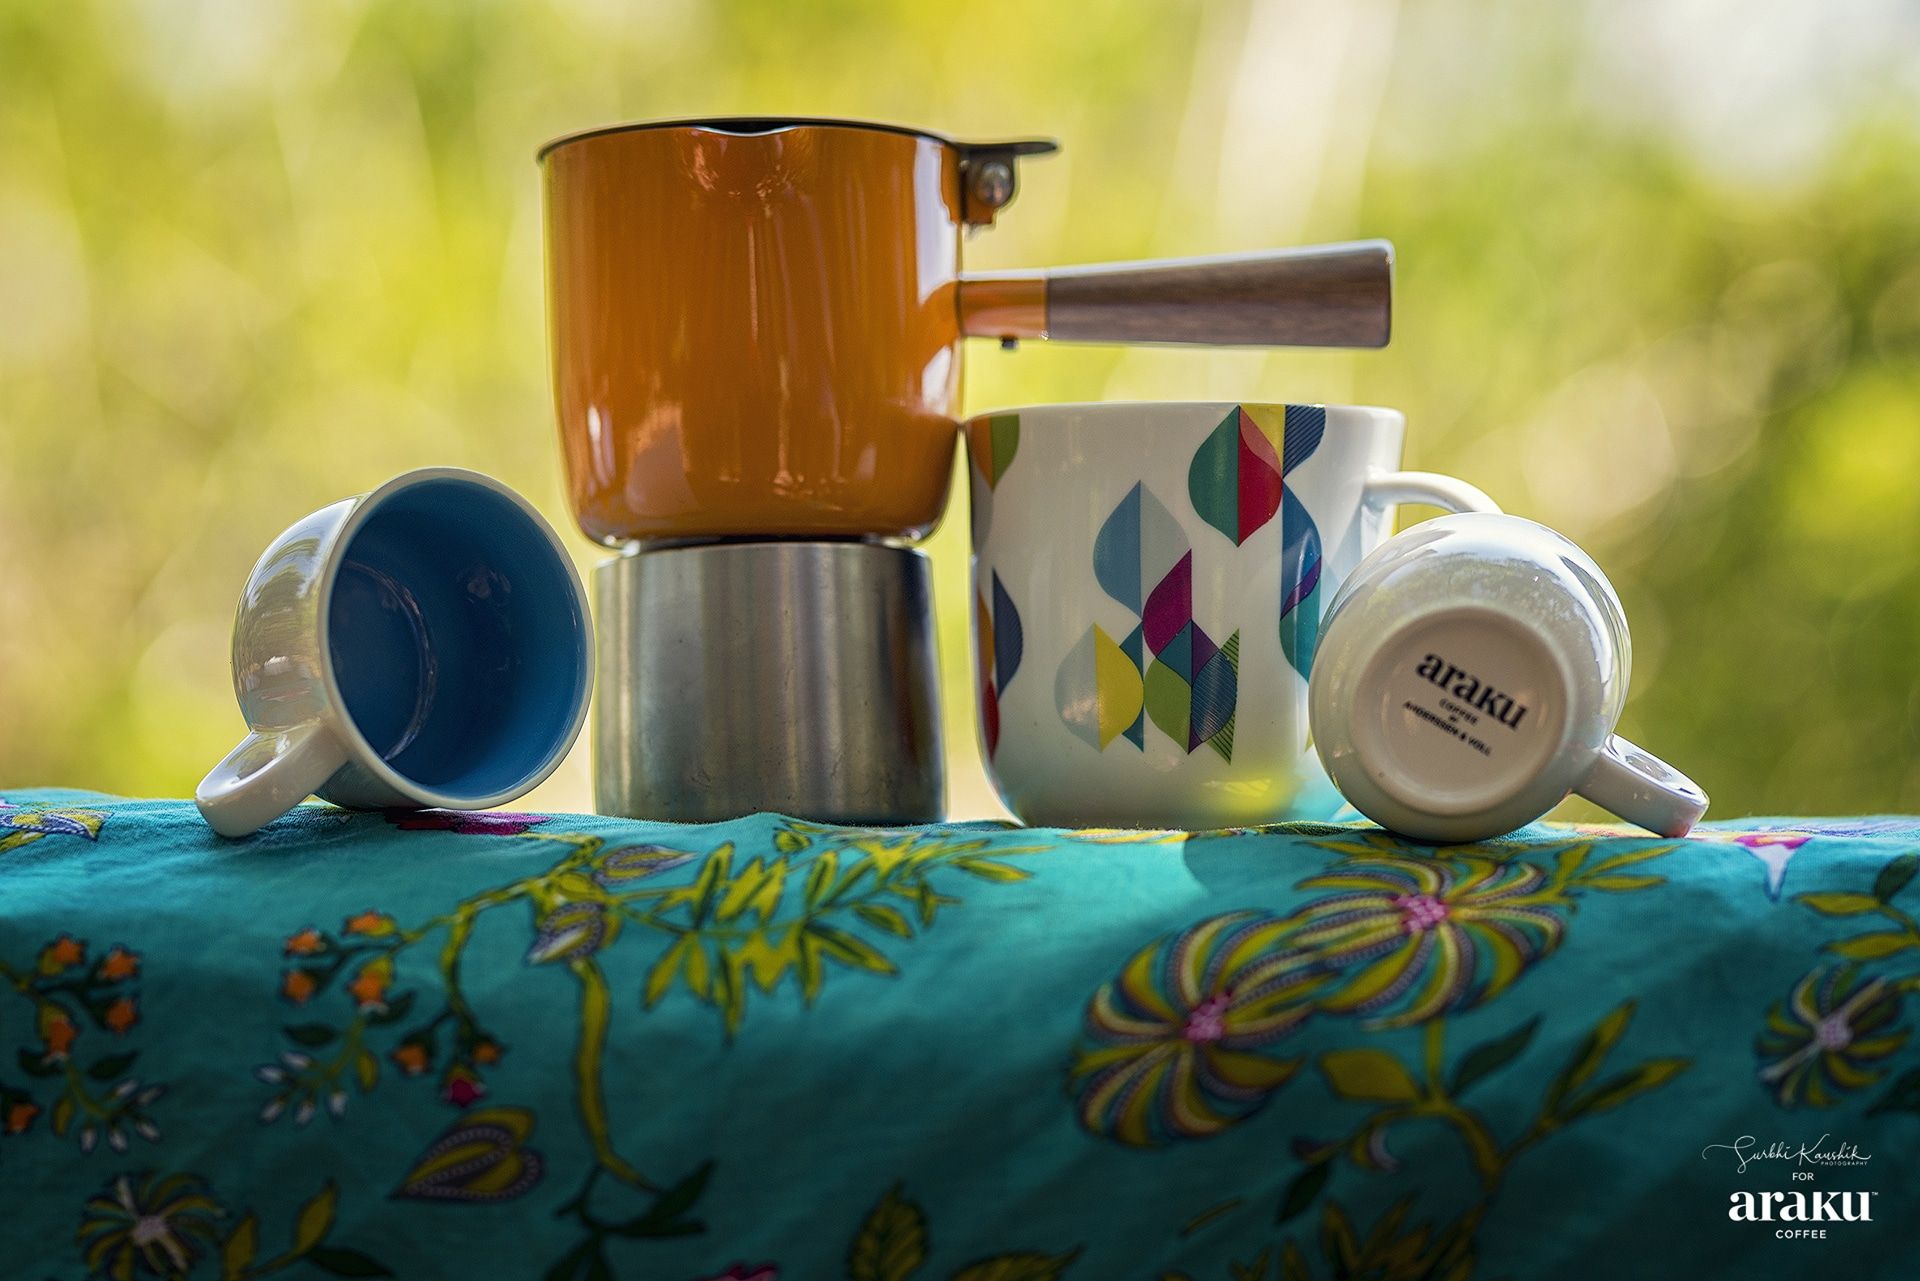 ARAKU Cappuccino Cups, Mugs, Server ware